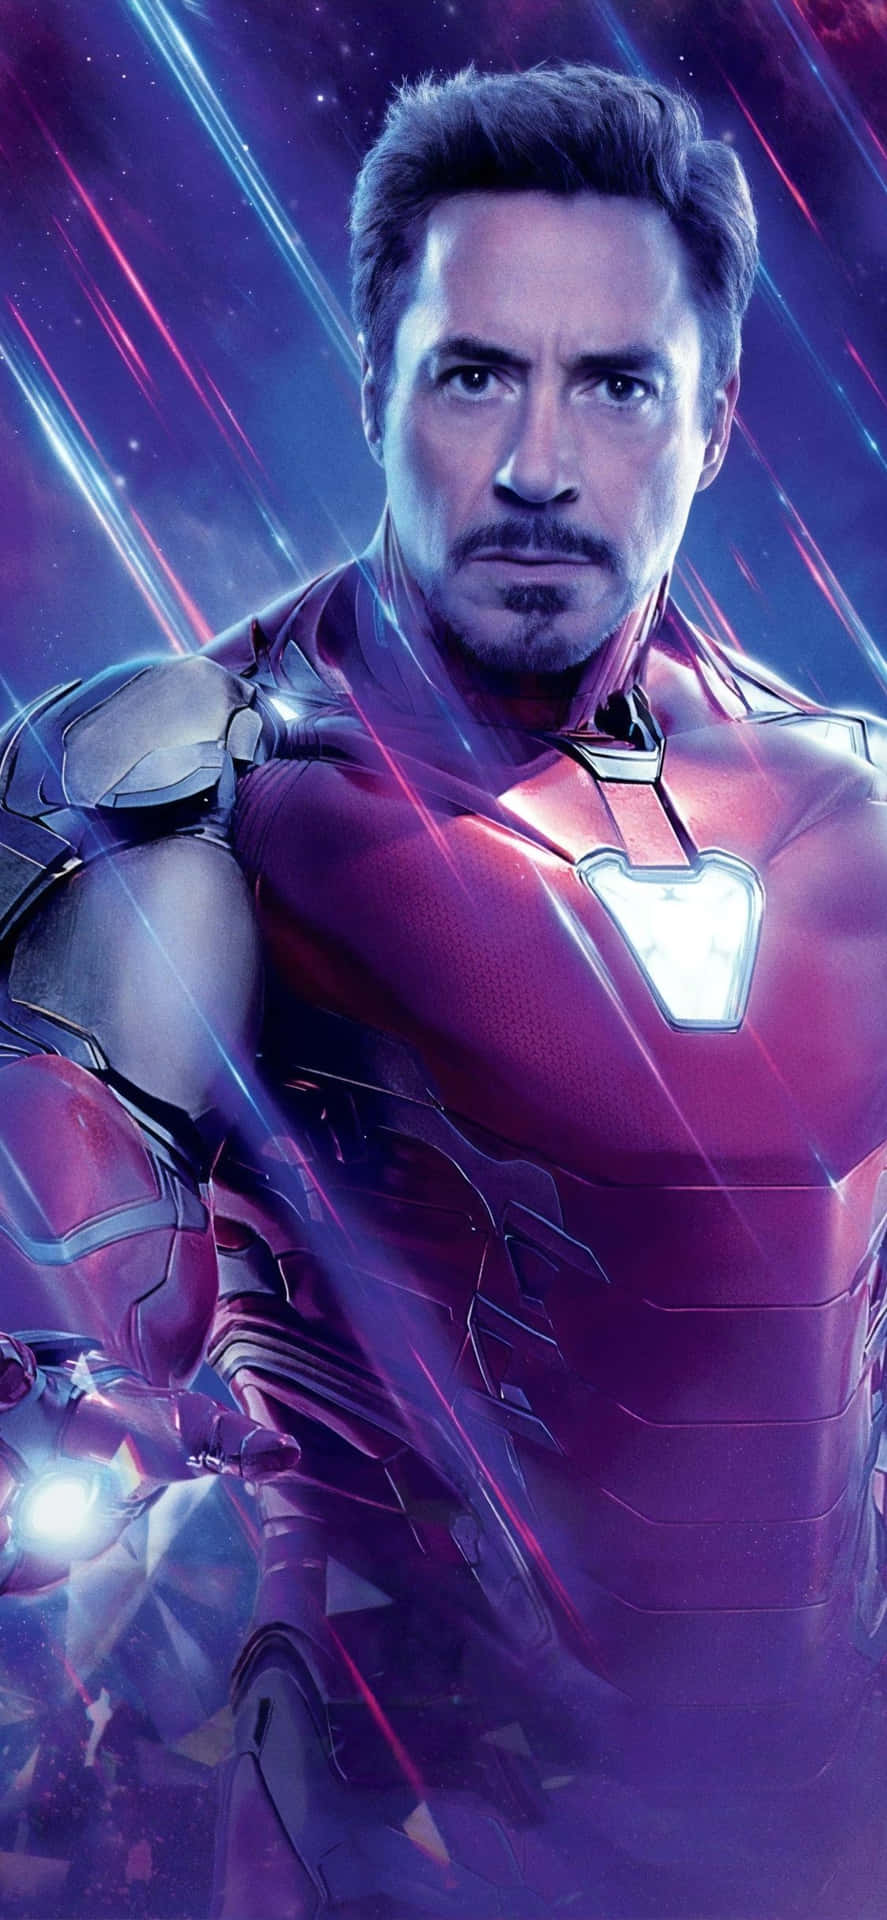 Rock the Superhero Style with Tony Stark's Iconic Iron Man iPhone X Wallpaper